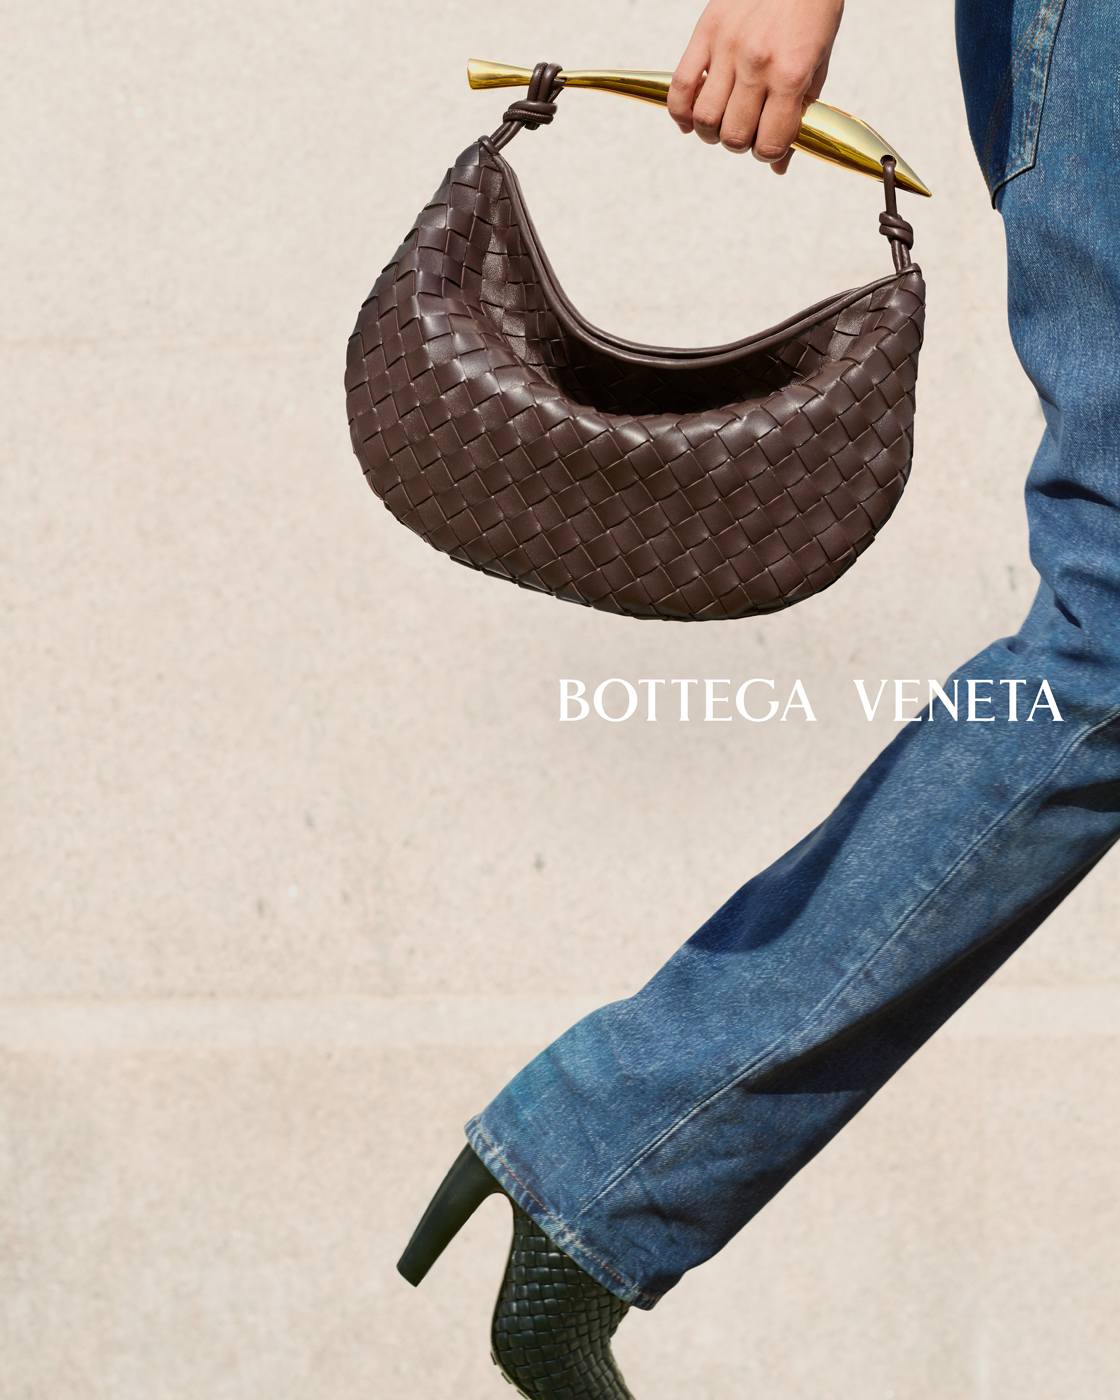 Bottega Veneta's First Matthieu Blazy Campaign Is a Free Book